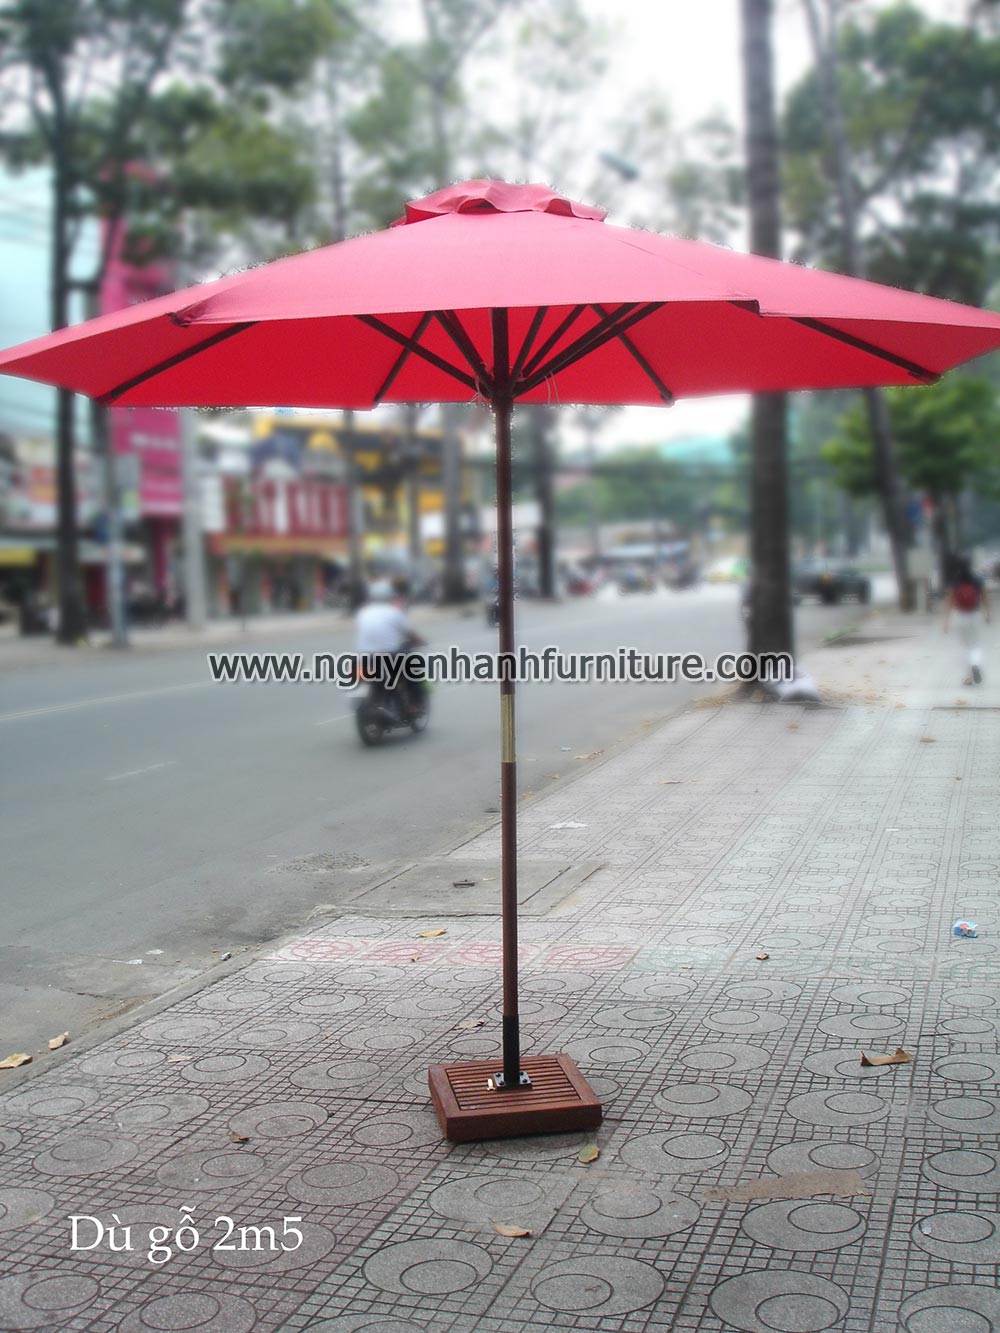 Name product: 2m5 Wooden umbrella 